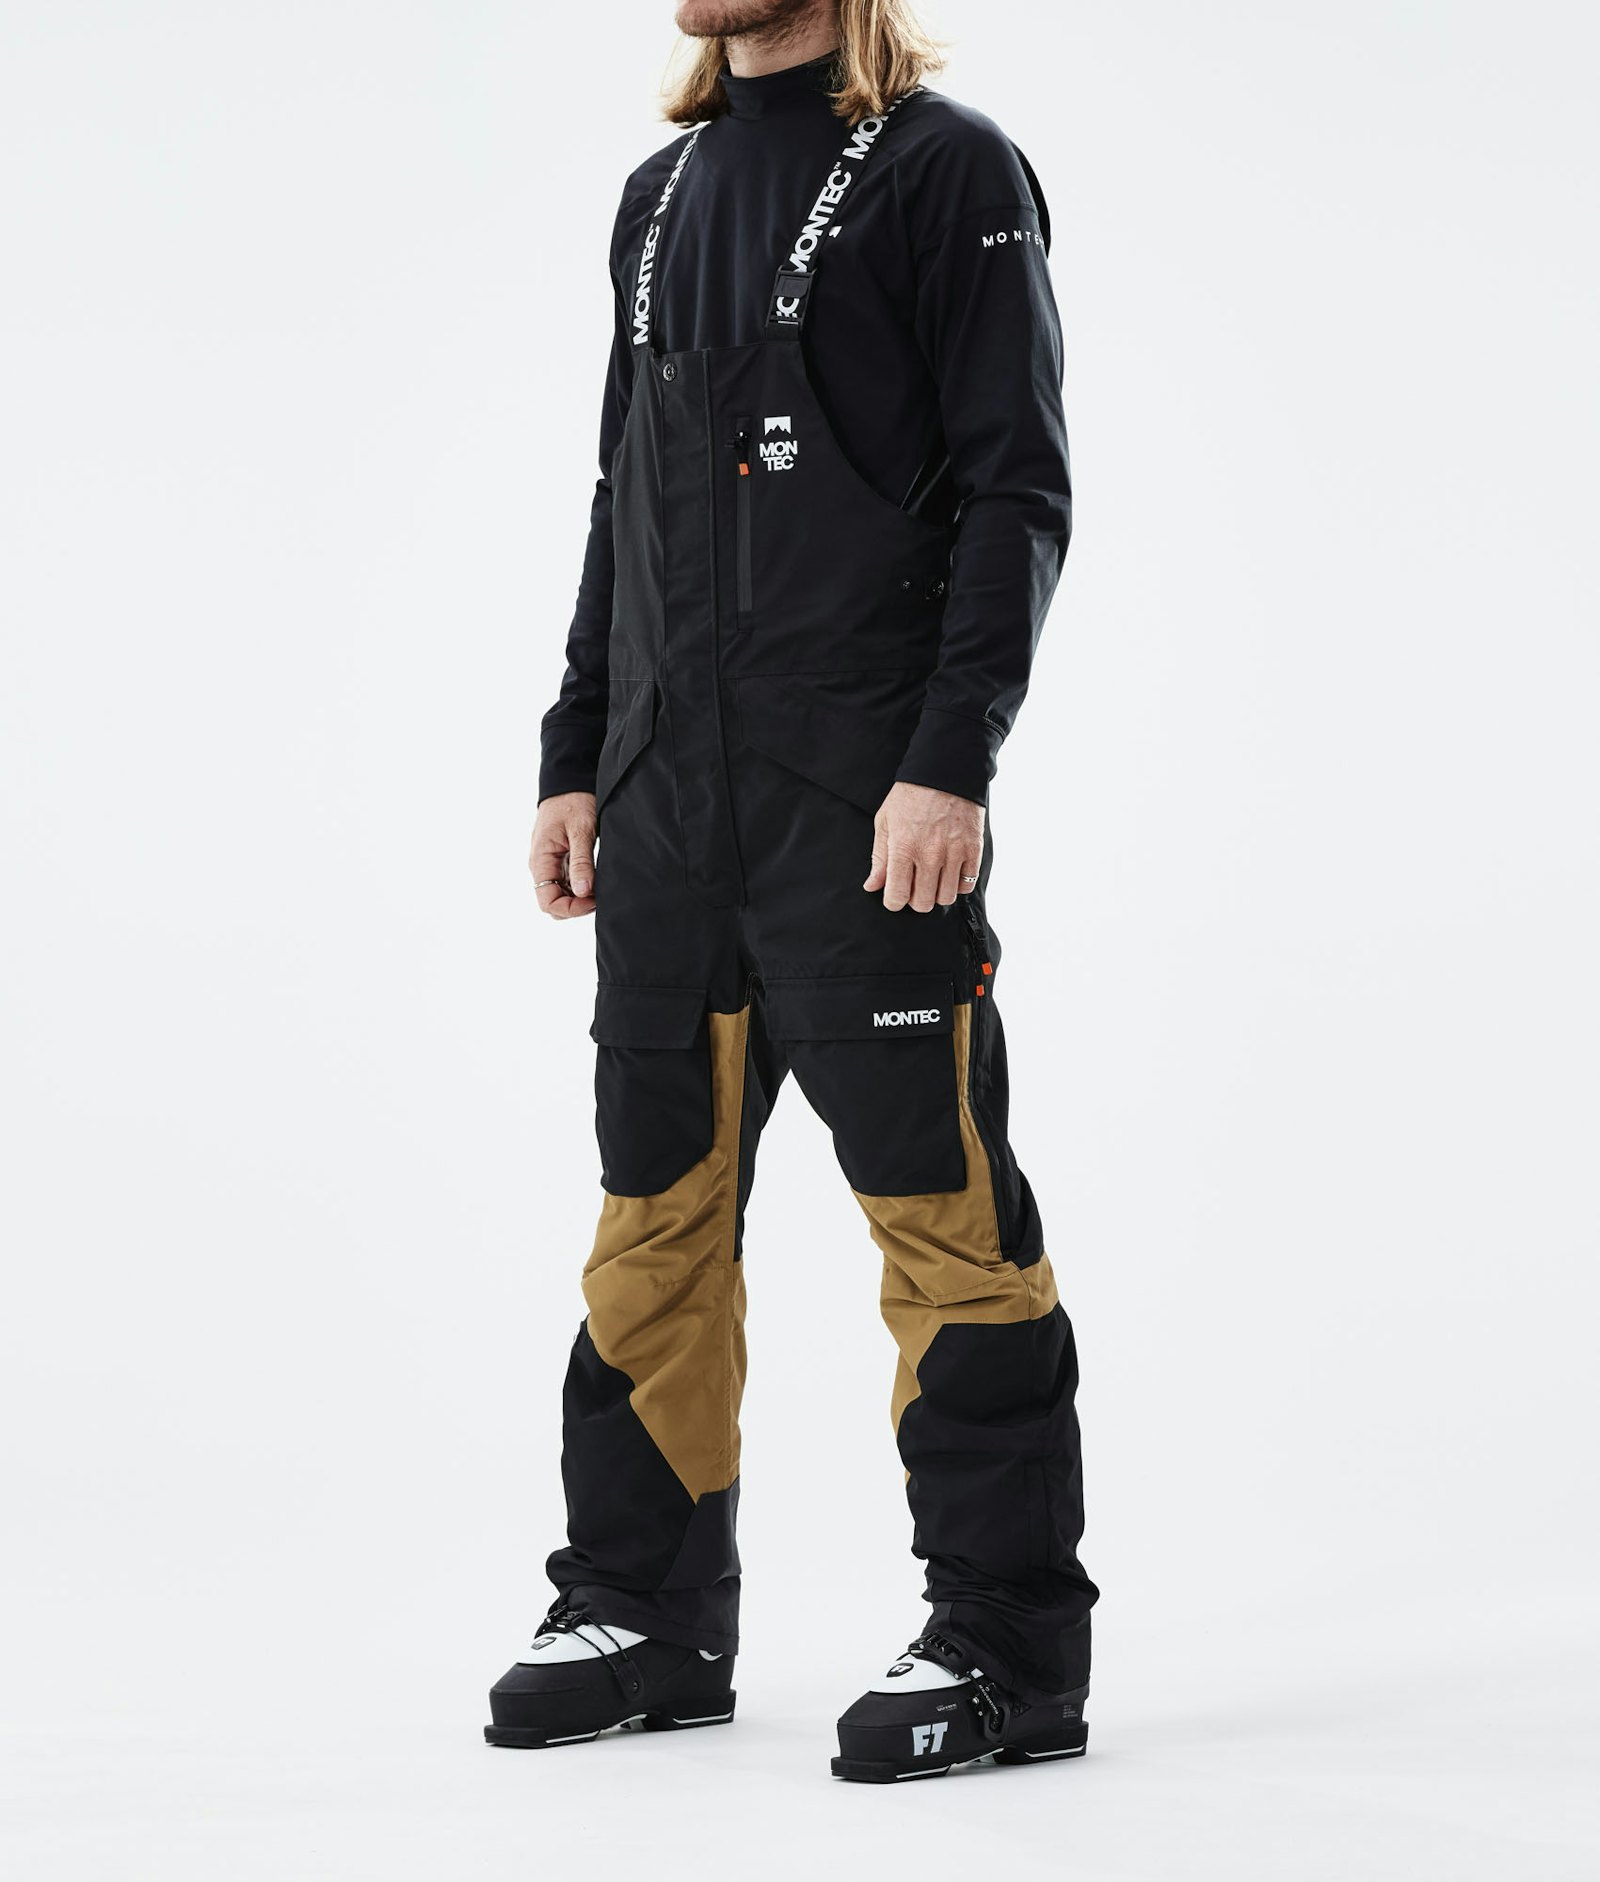 Fawk 2021 Ski Pants Men Black/Gold, Image 1 of 6